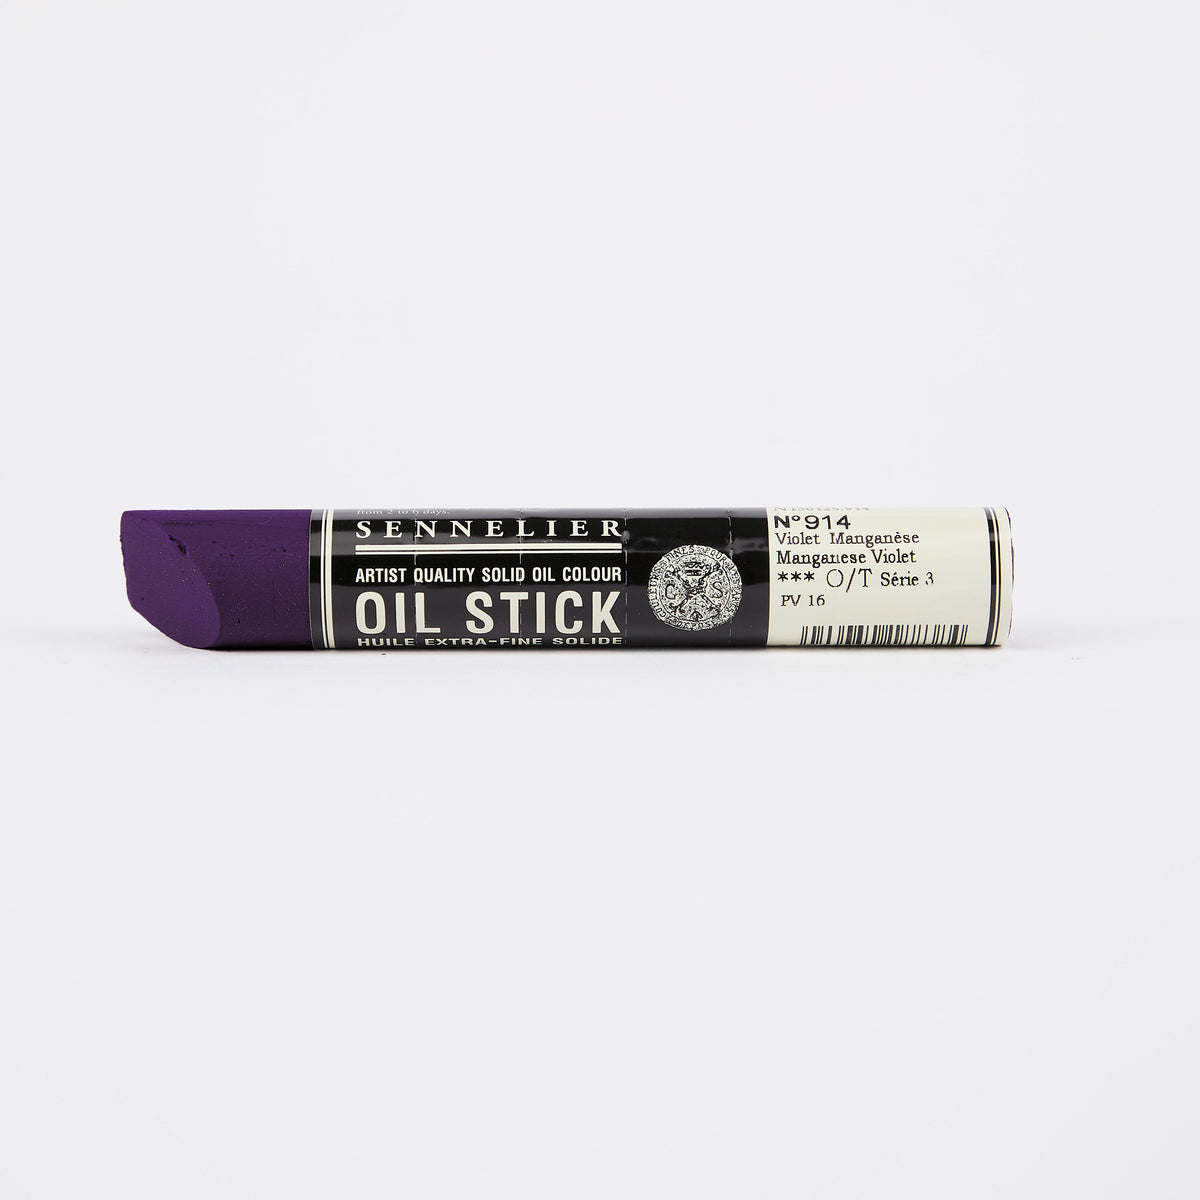 Sennelier Oil Stick 38ml Manganese violet S2